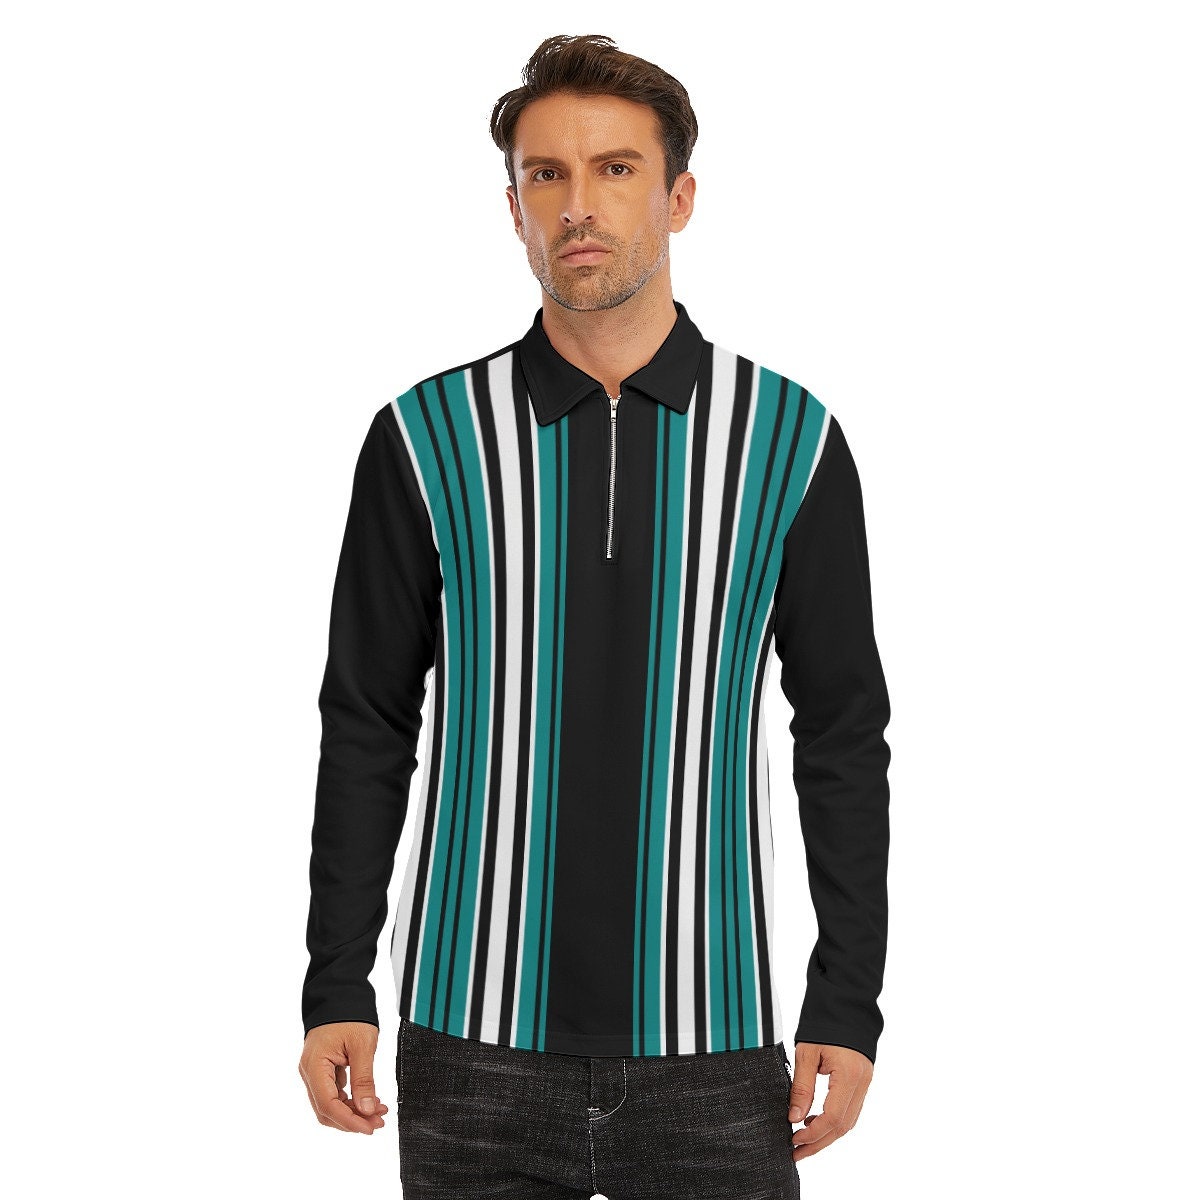 Retro Polo Shirt, Black Stripe Polo Shirt, Vintage Style Polo Shirt, Long Sleeve Polo Shirt, Polo Shirt Men,60s style polo,Zipper Polo Shirt